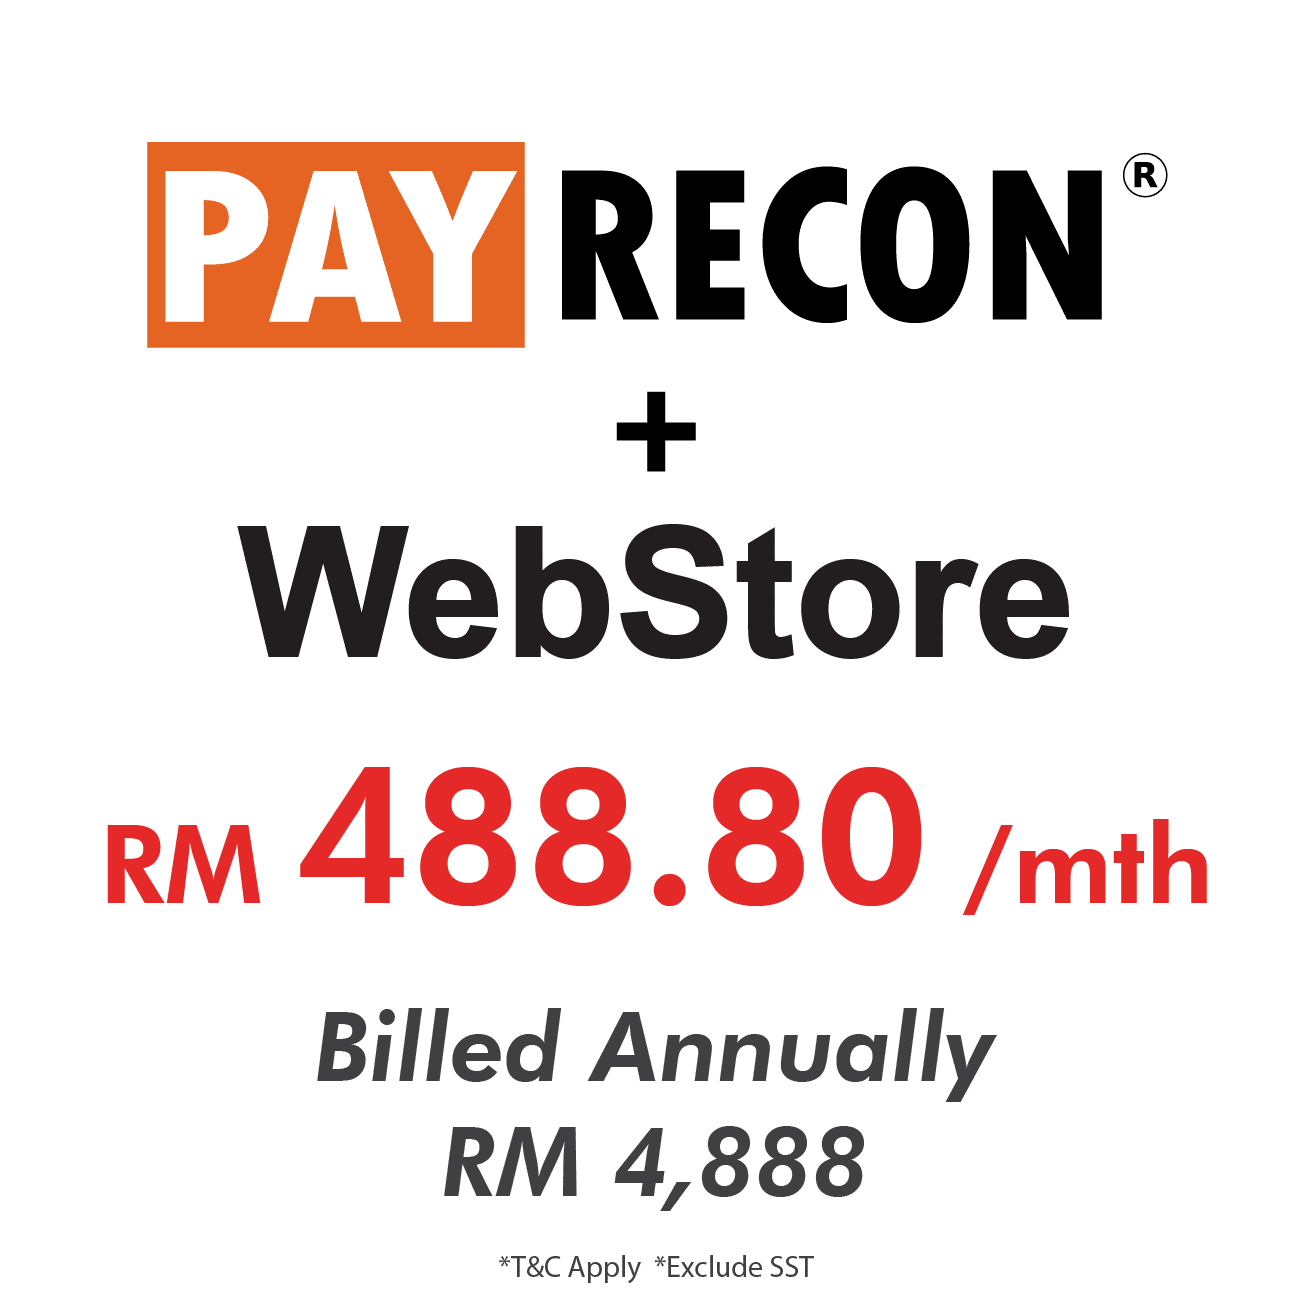 Payrecon Webstore Price